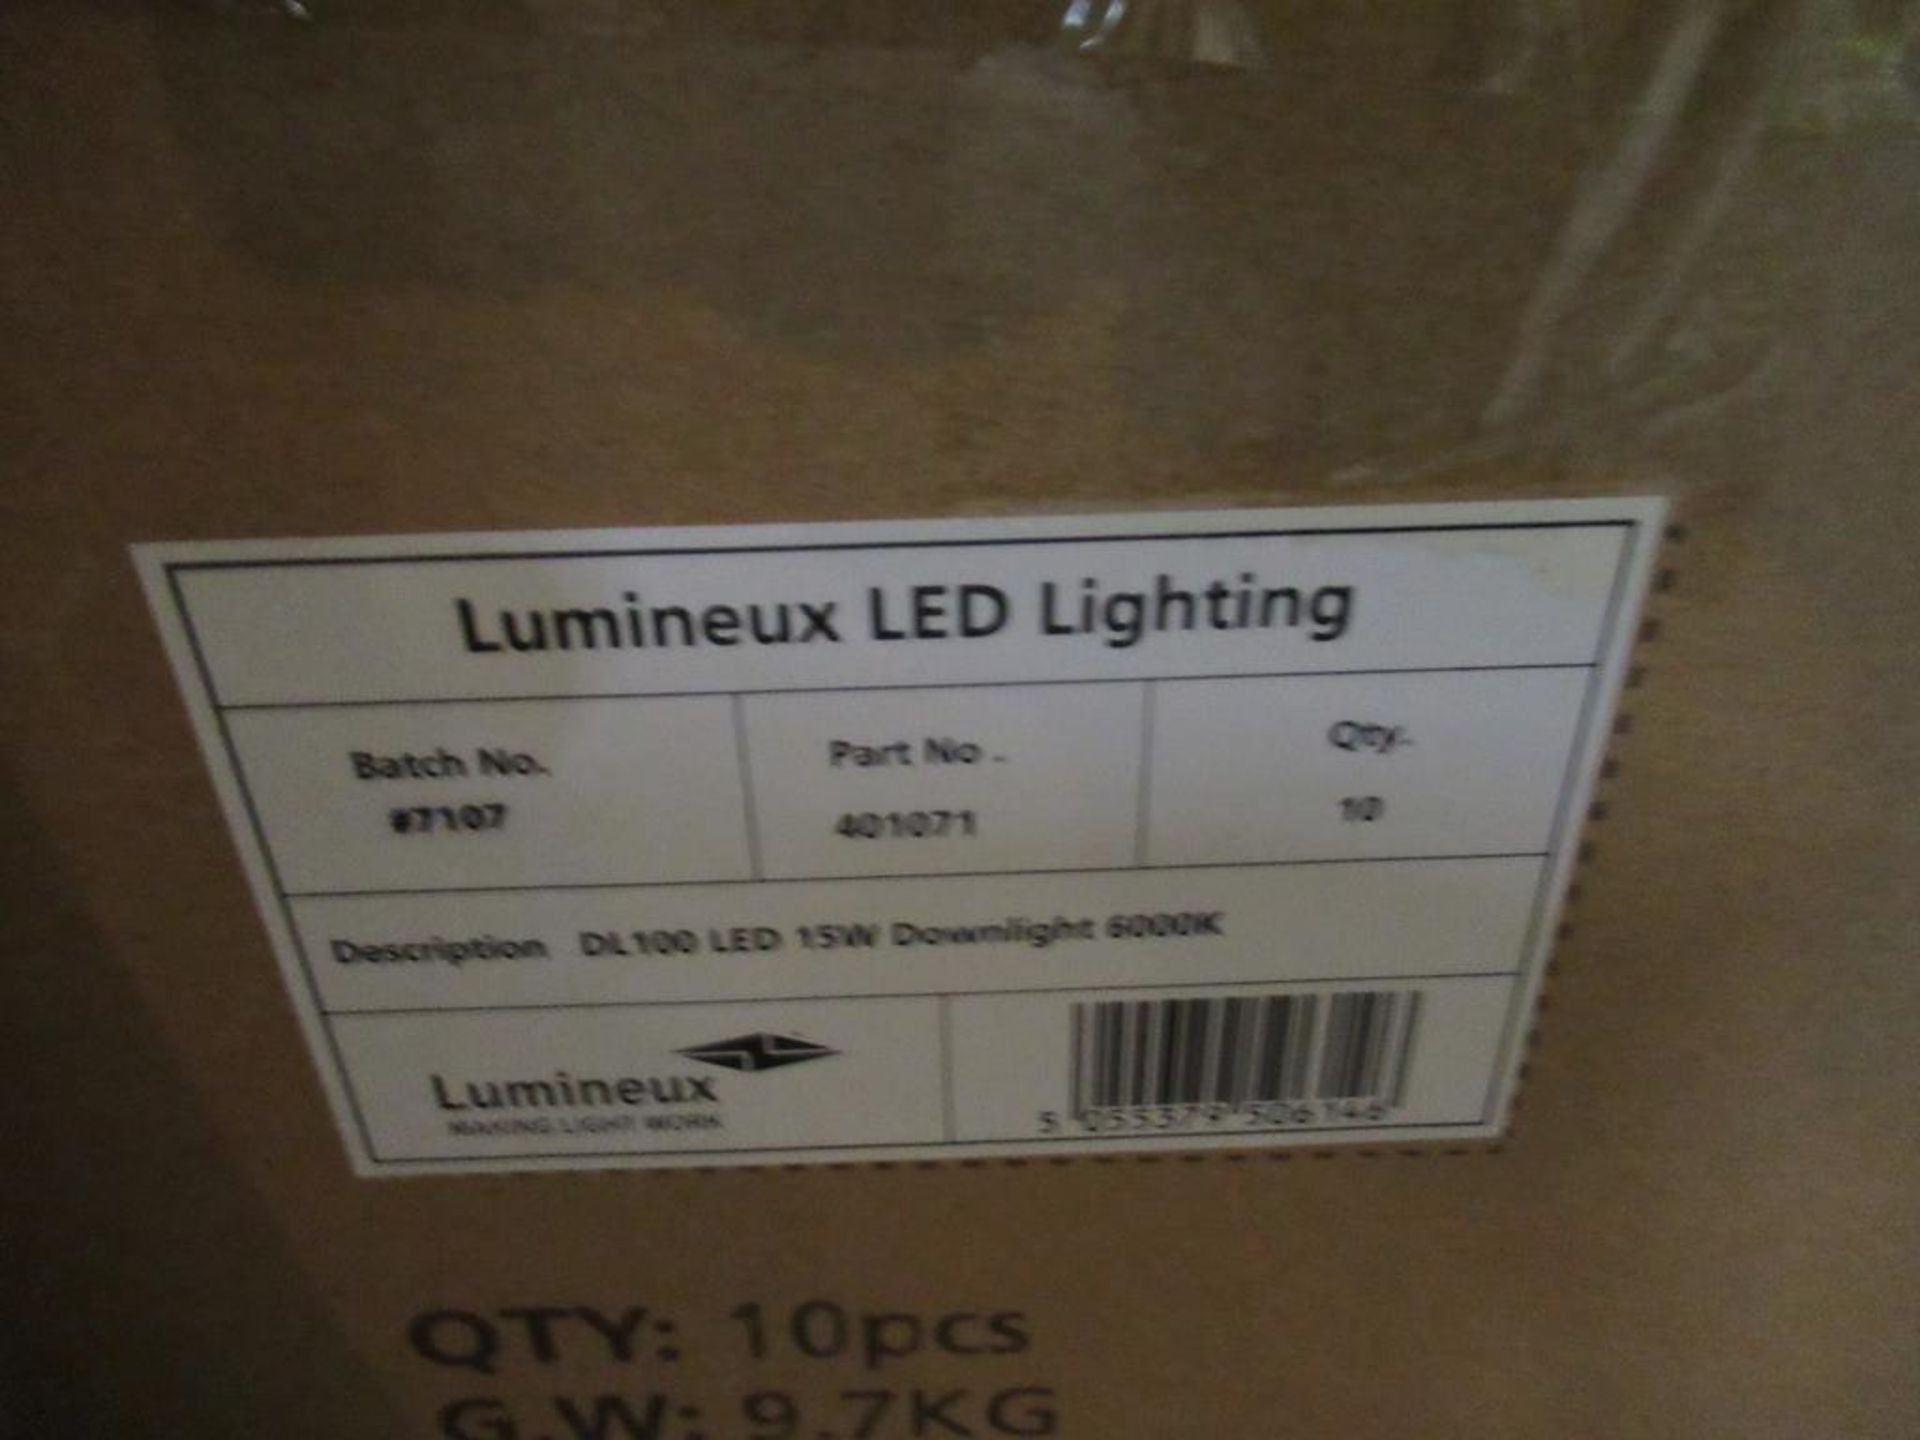 20 x Lumineux LED 15W Downlight 6000K 1180lm 200/240V White OEM Trade Price £300 - Image 3 of 3